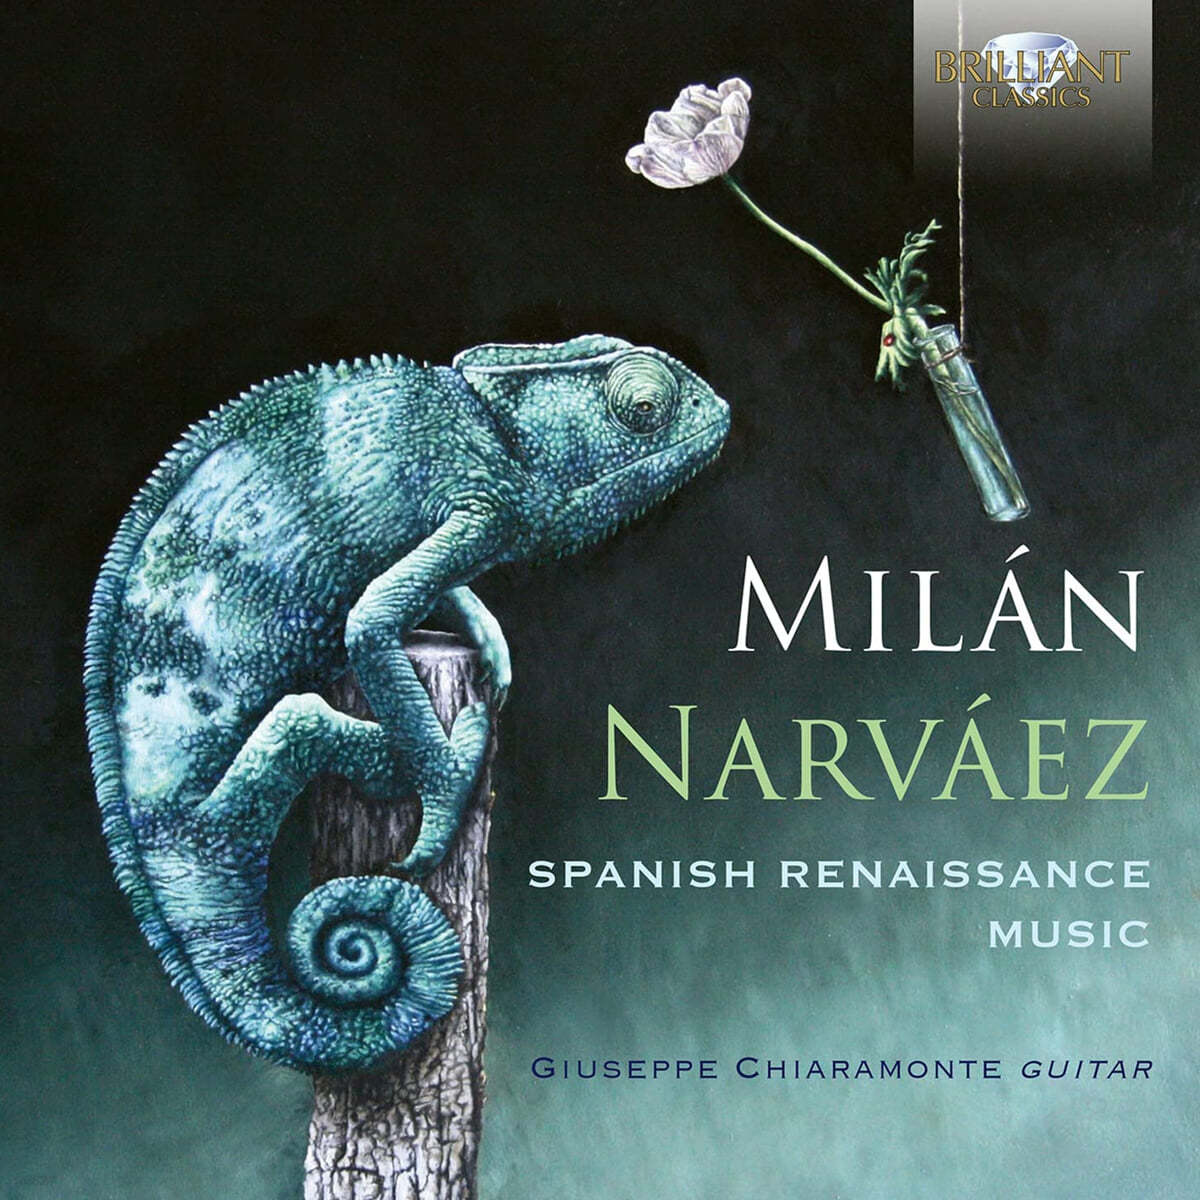 Giuseppe Chiaramonte 16세기 스페인 기타 독주곡 - 밀란 / 나르바에즈 (Milan / Narvaez: Spanish Renaissance Music)